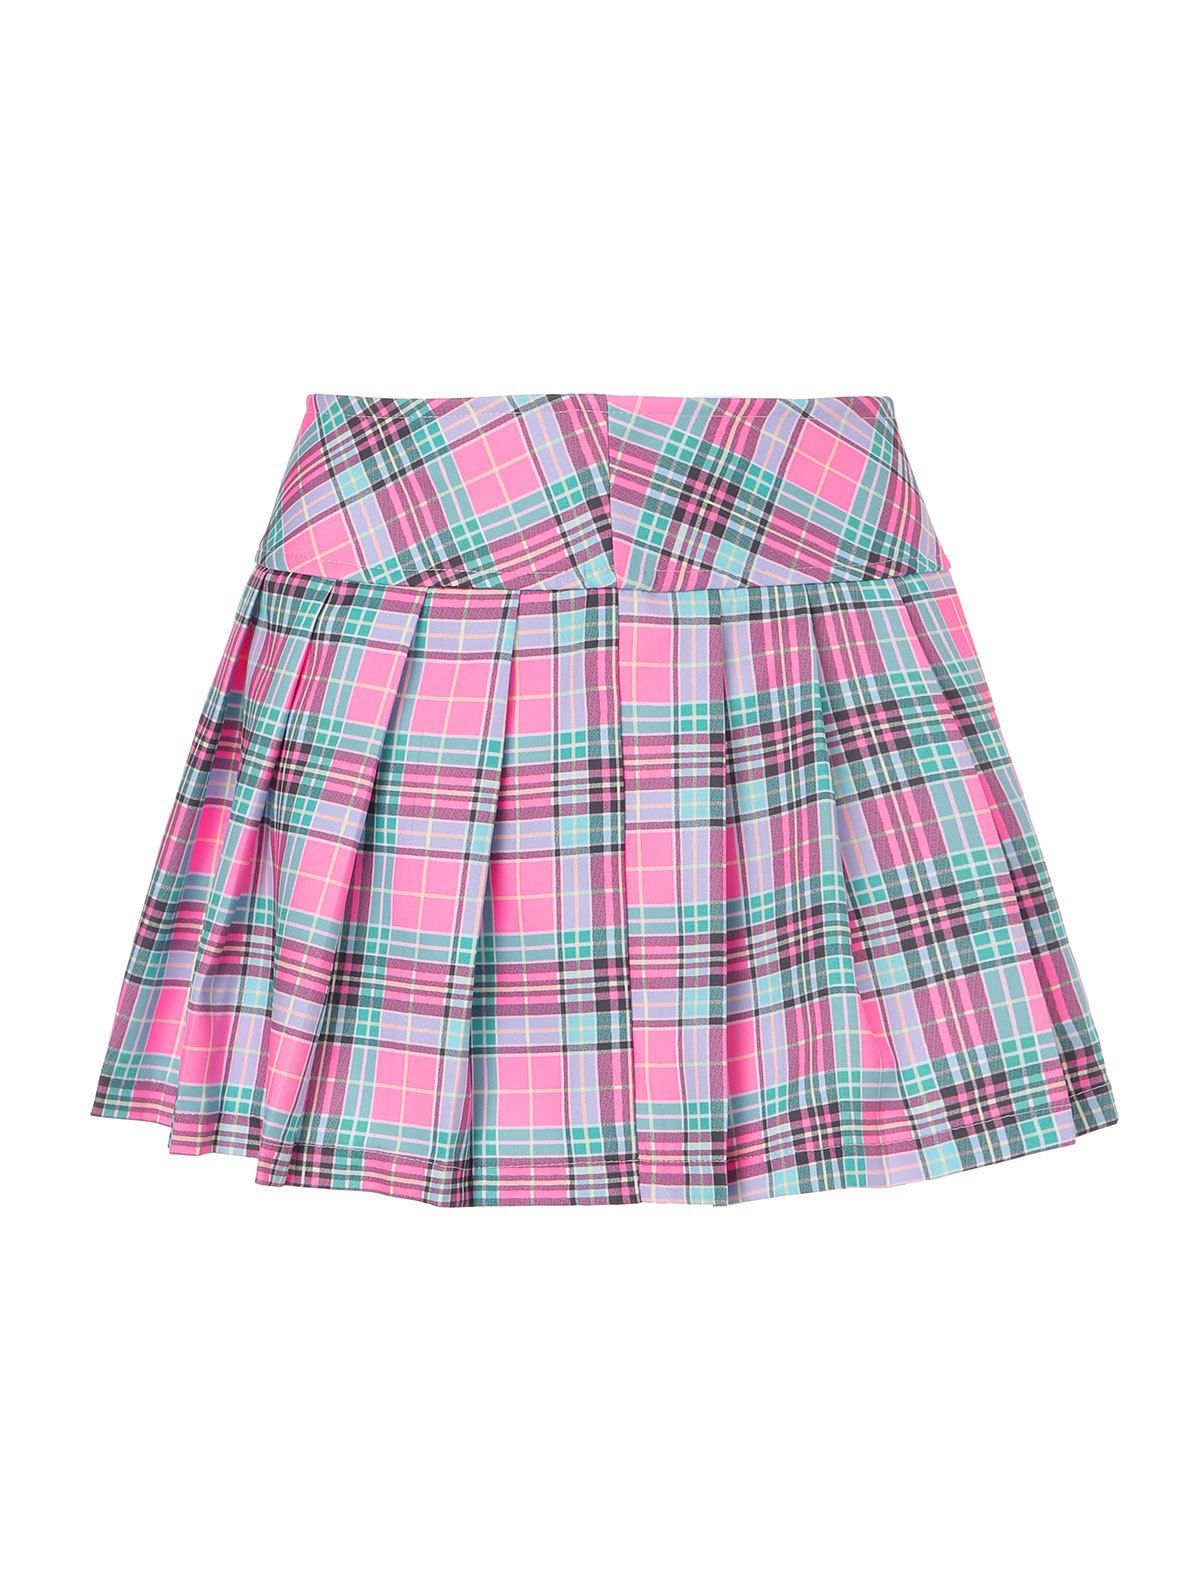 Plaid Wide Waistband Pleated Skirt - LIGHT PINK S